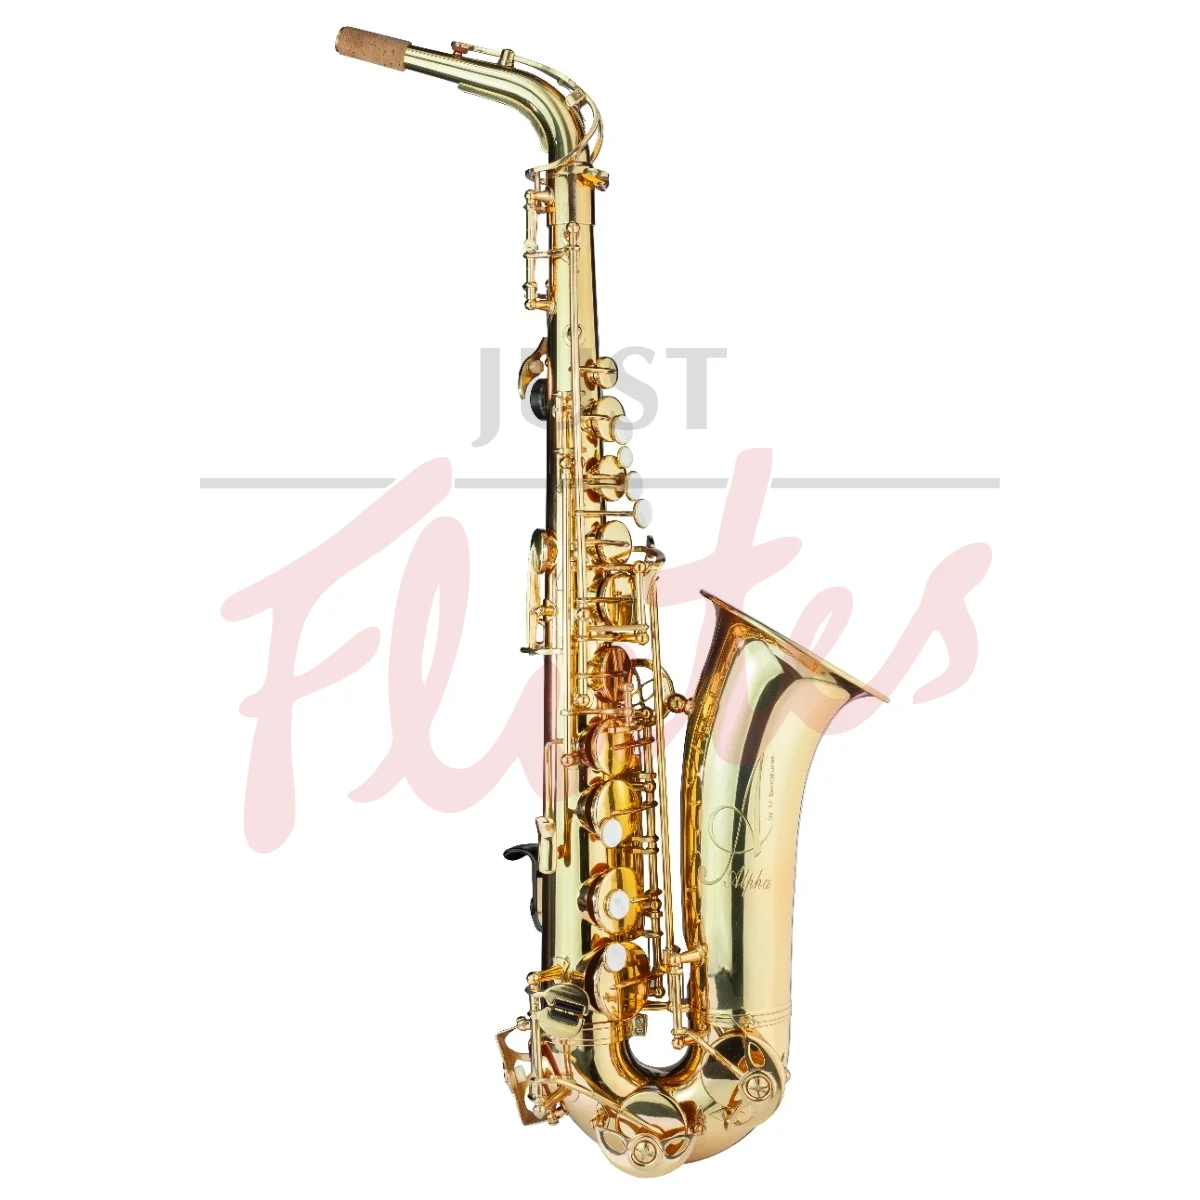 Trevor James saxophone - Alphasax